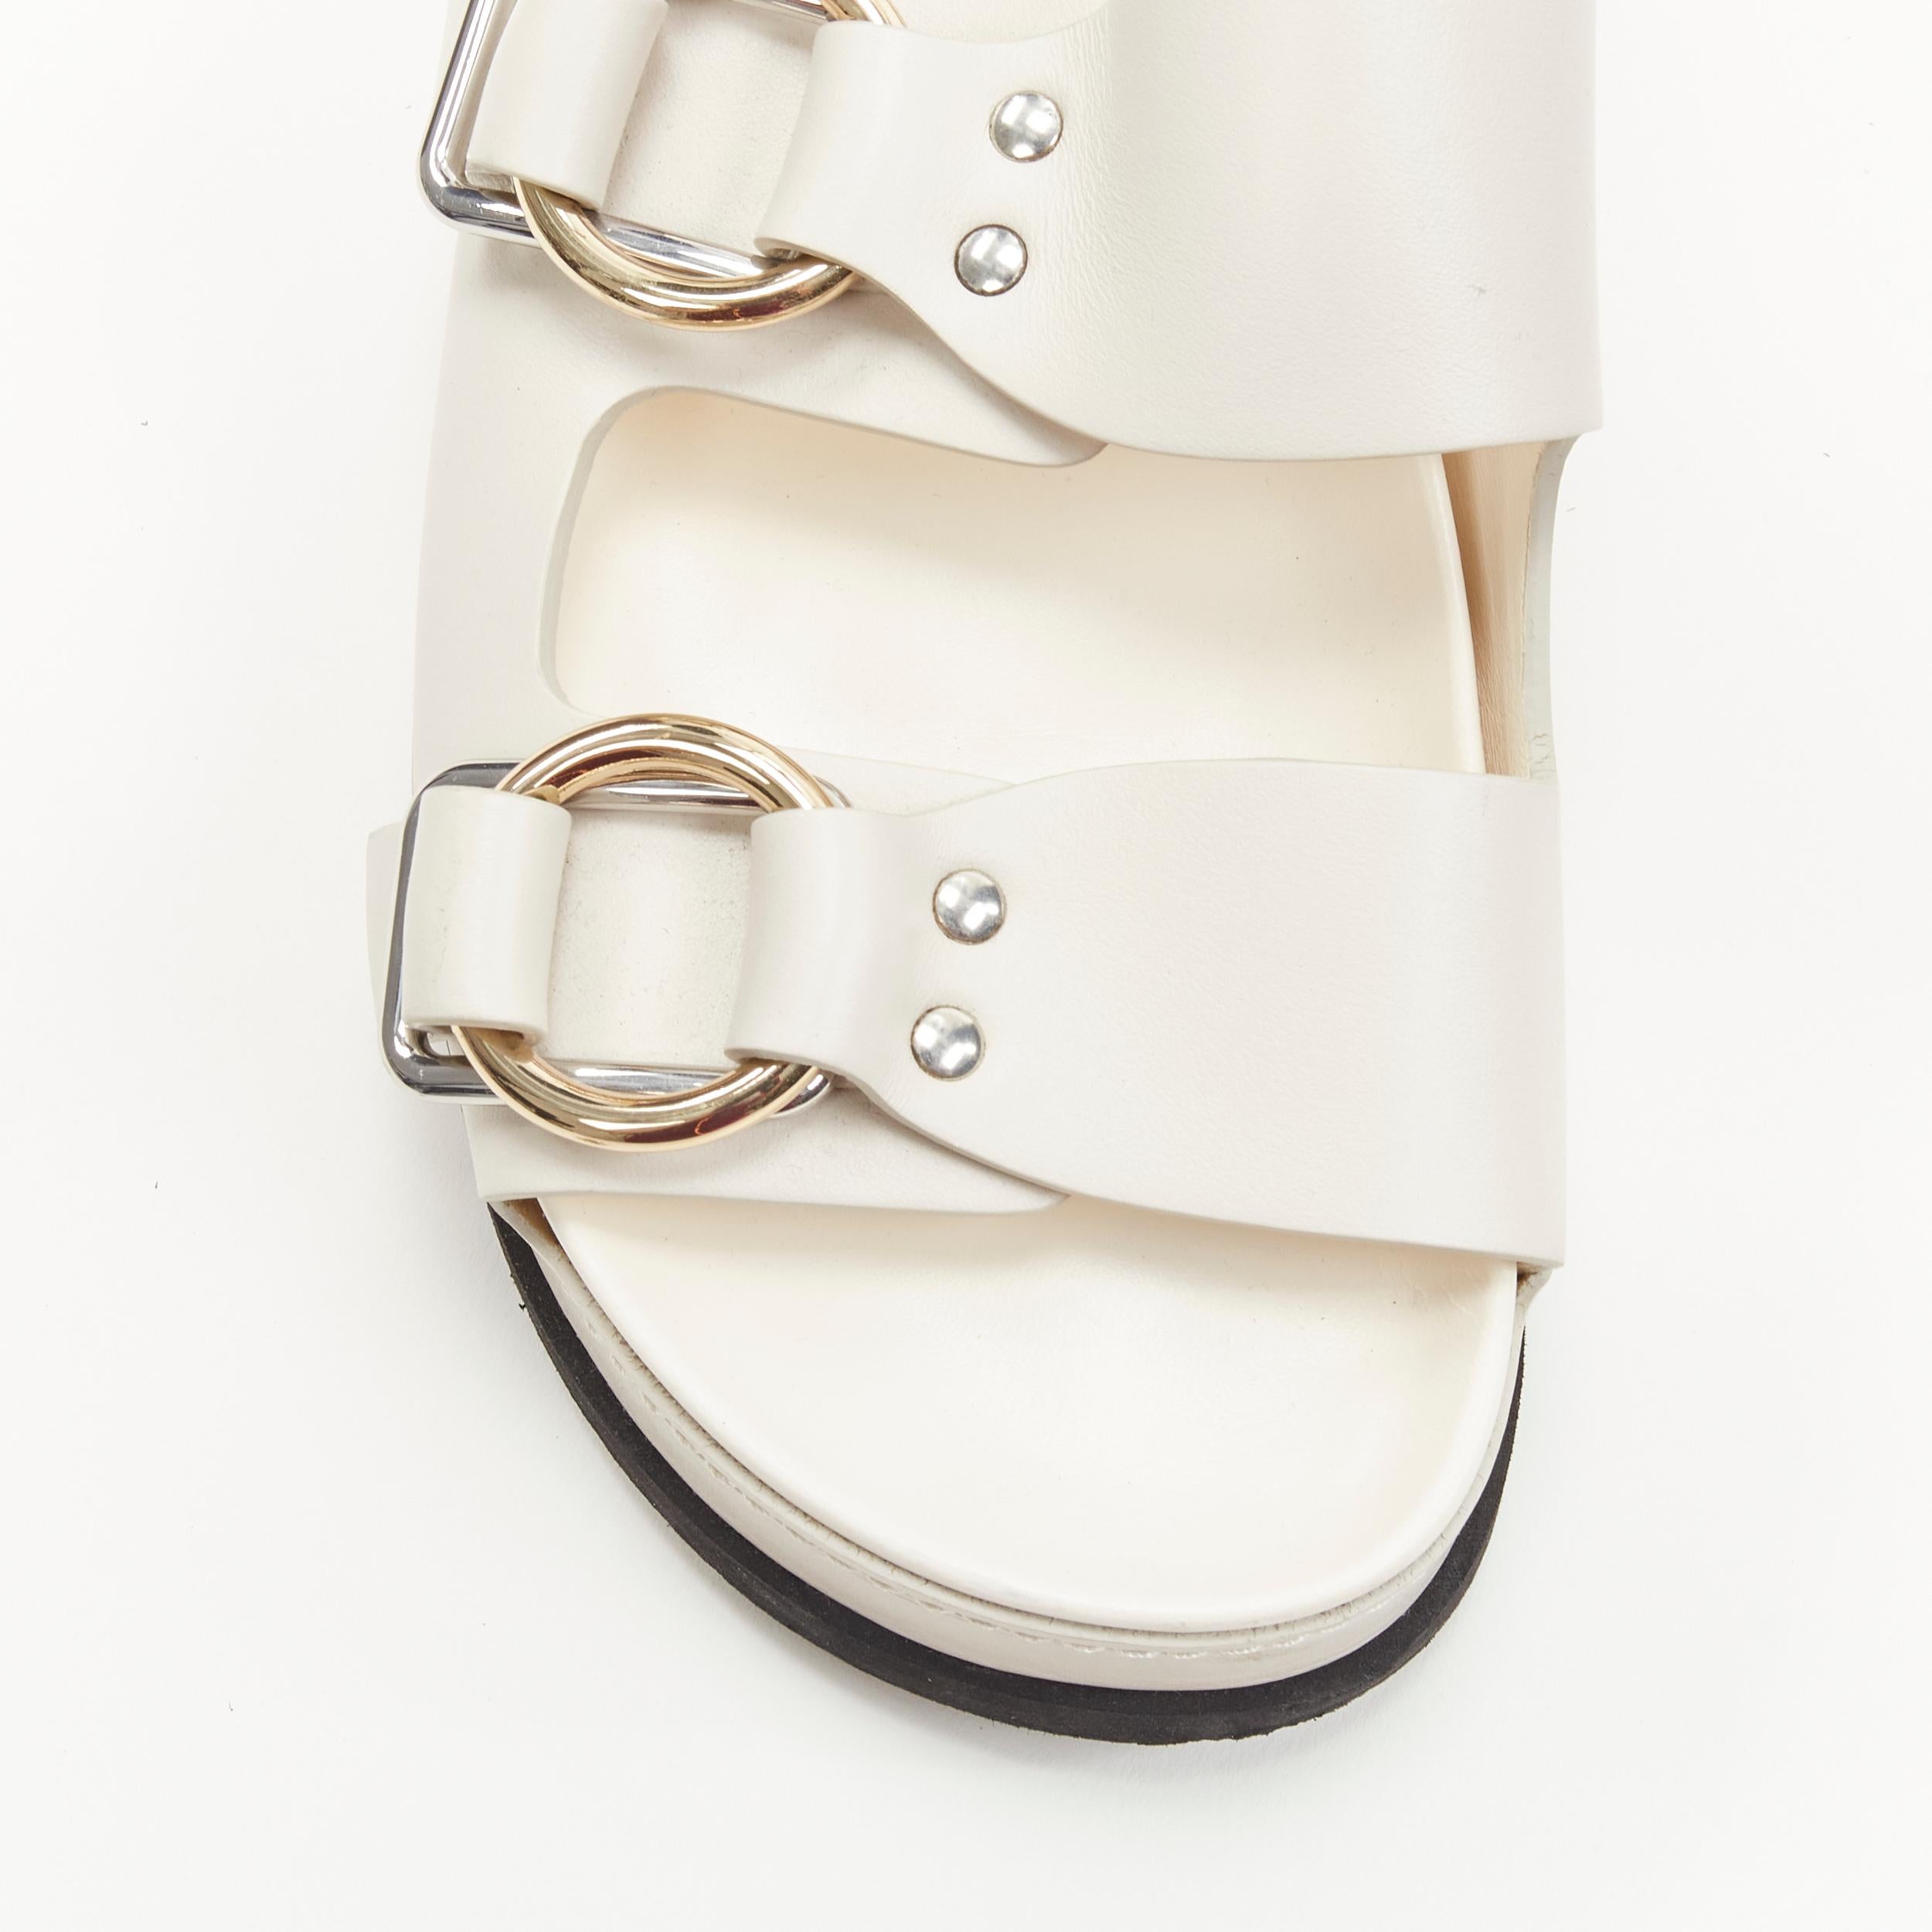 Women's 3.1 PHILLIP LIM cream white leather mixed metal buckle platform sandals EU38 US8